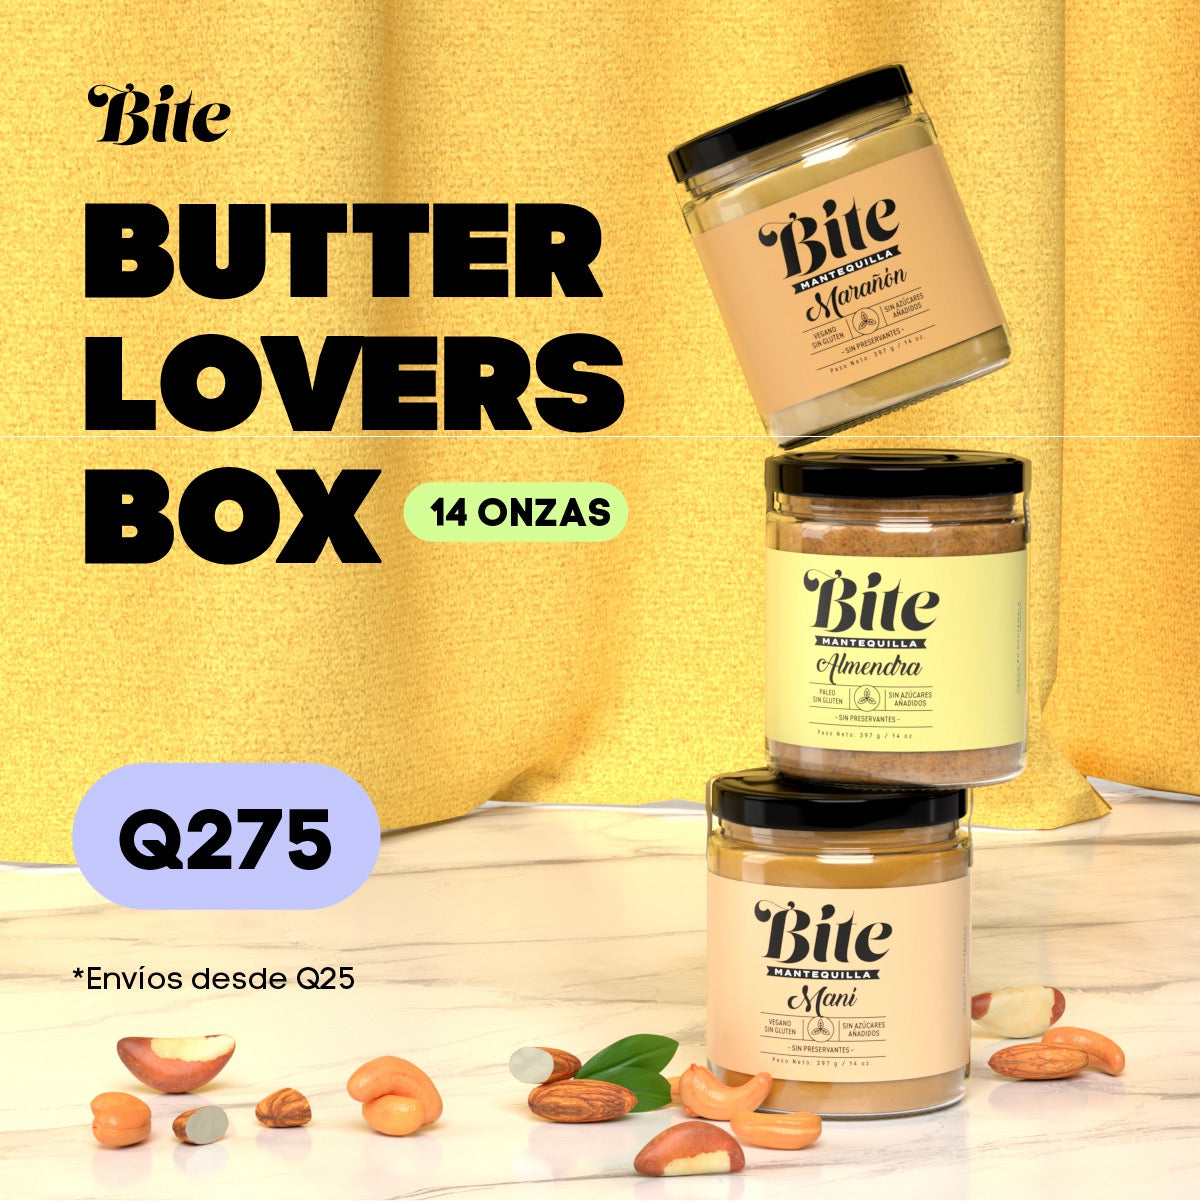 Butterlover's Box 14 oz